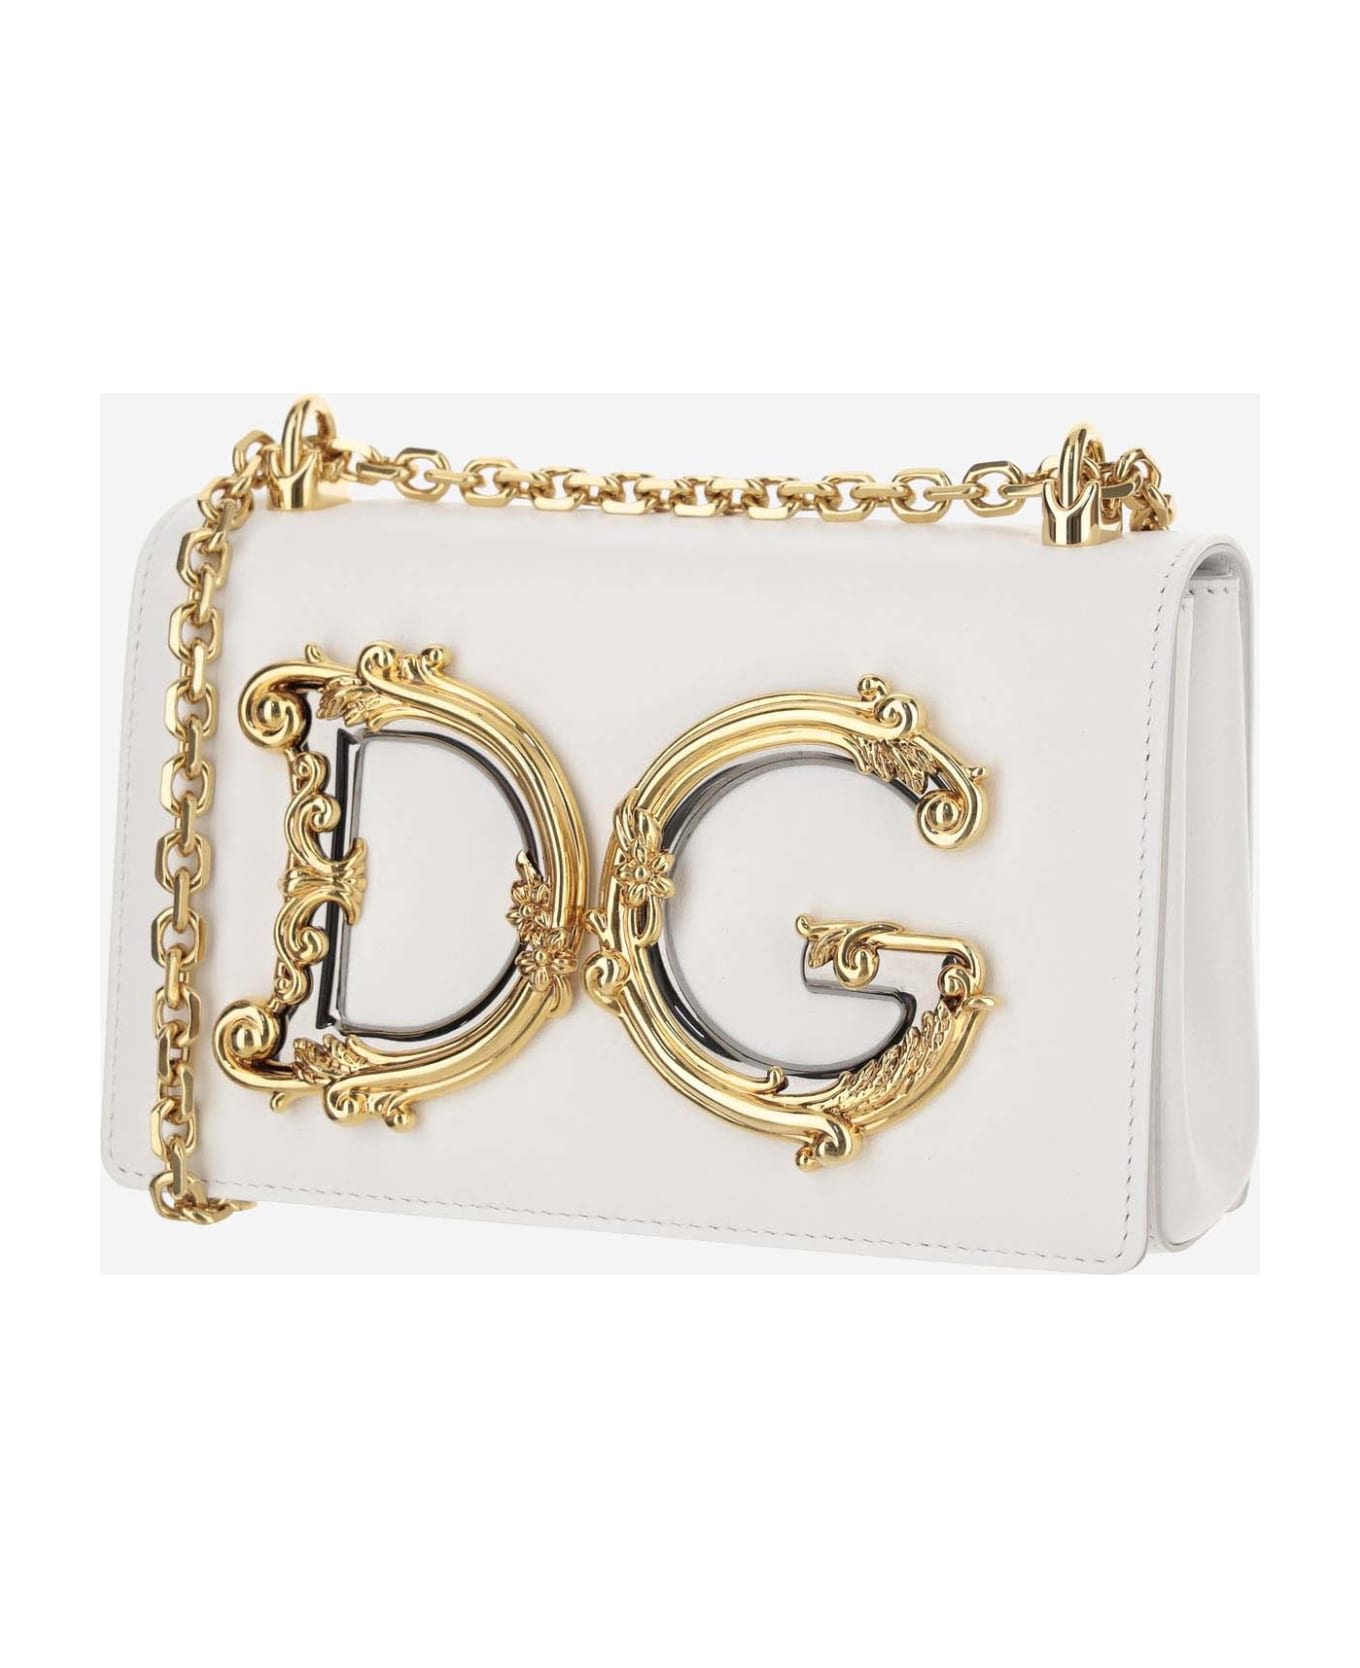 Dolce & Gabbana Shoulder Bag With Logo Plaque - White